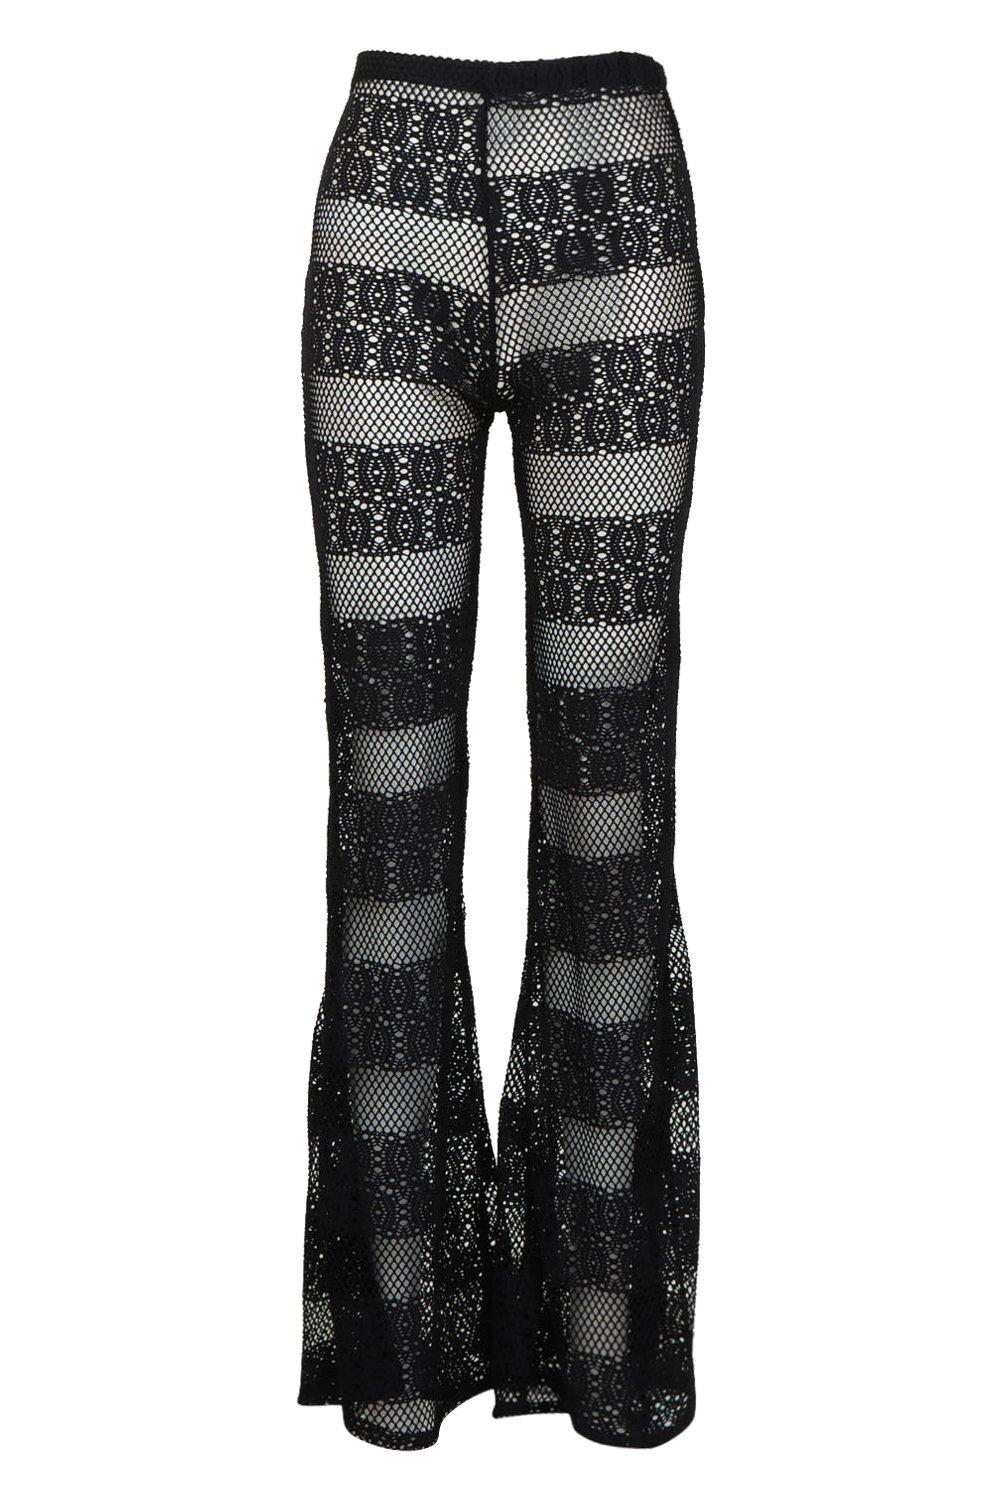 boohoo Crochet Fishnet Wide Leg Pants - Black - Size S